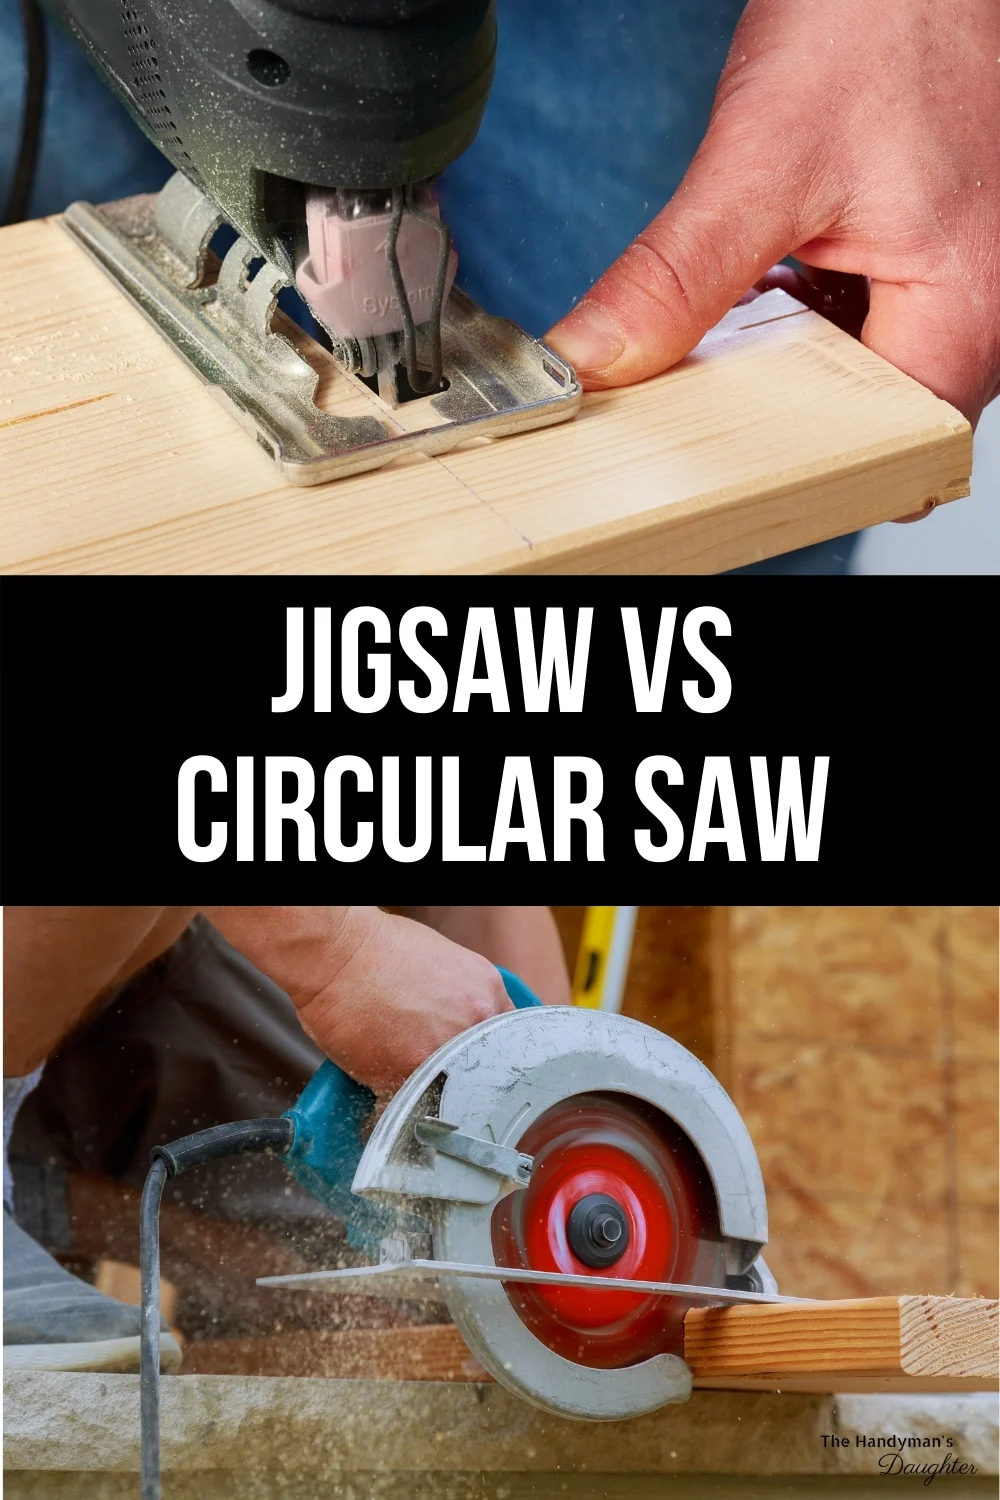 is saw the same as jigsaw? 2